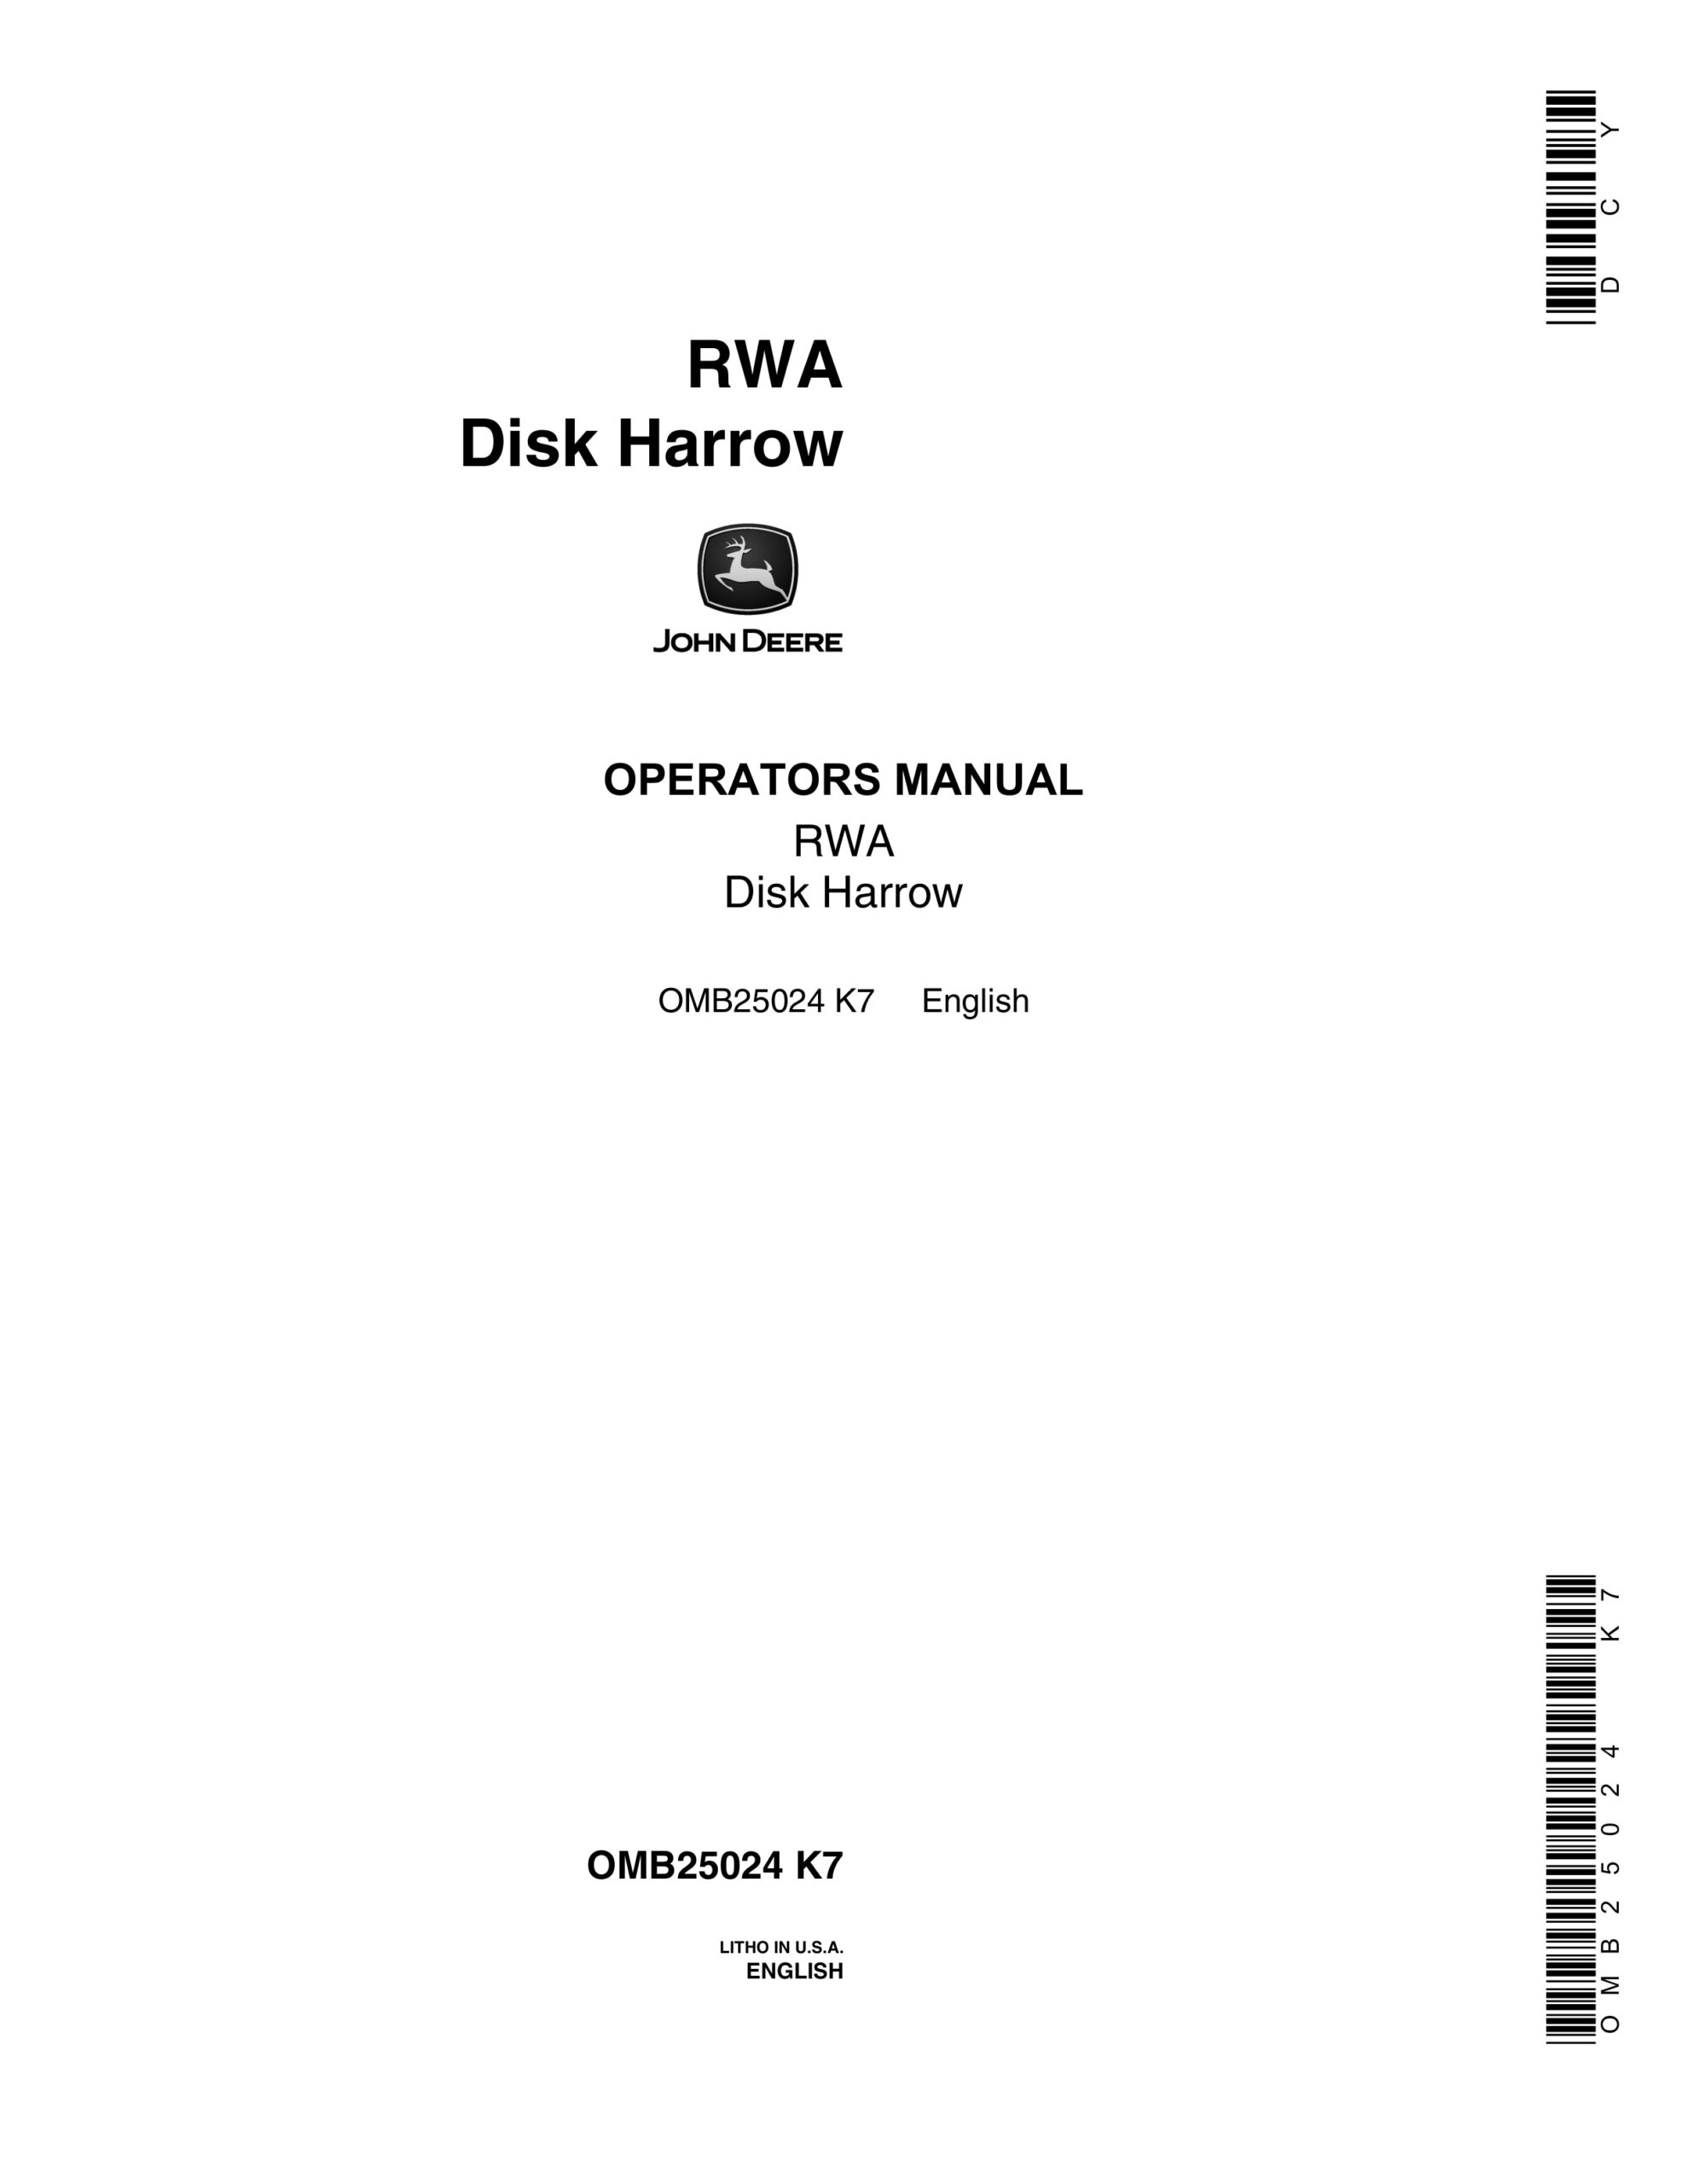 John Deere RWA Disk Harrow Operator Manual OMB25024-1